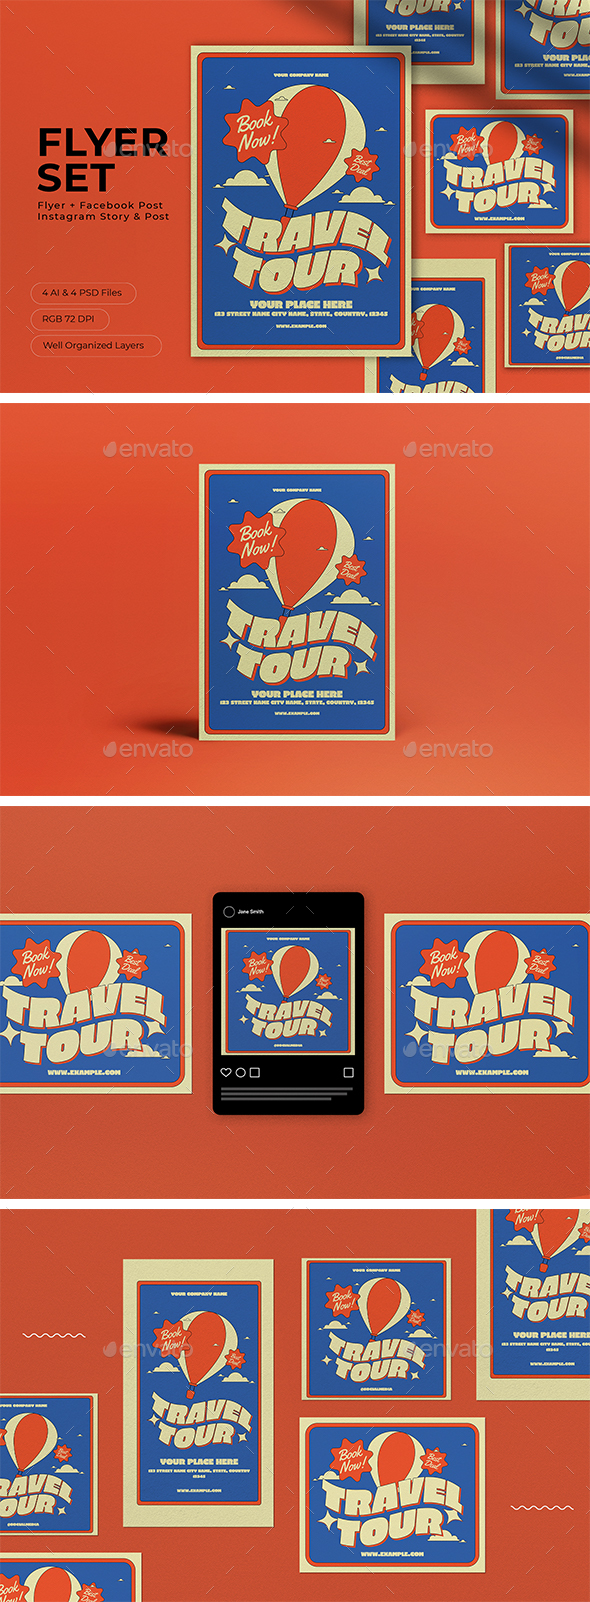 [DOWNLOAD]Cream Retro Travel Agency Flyer Set